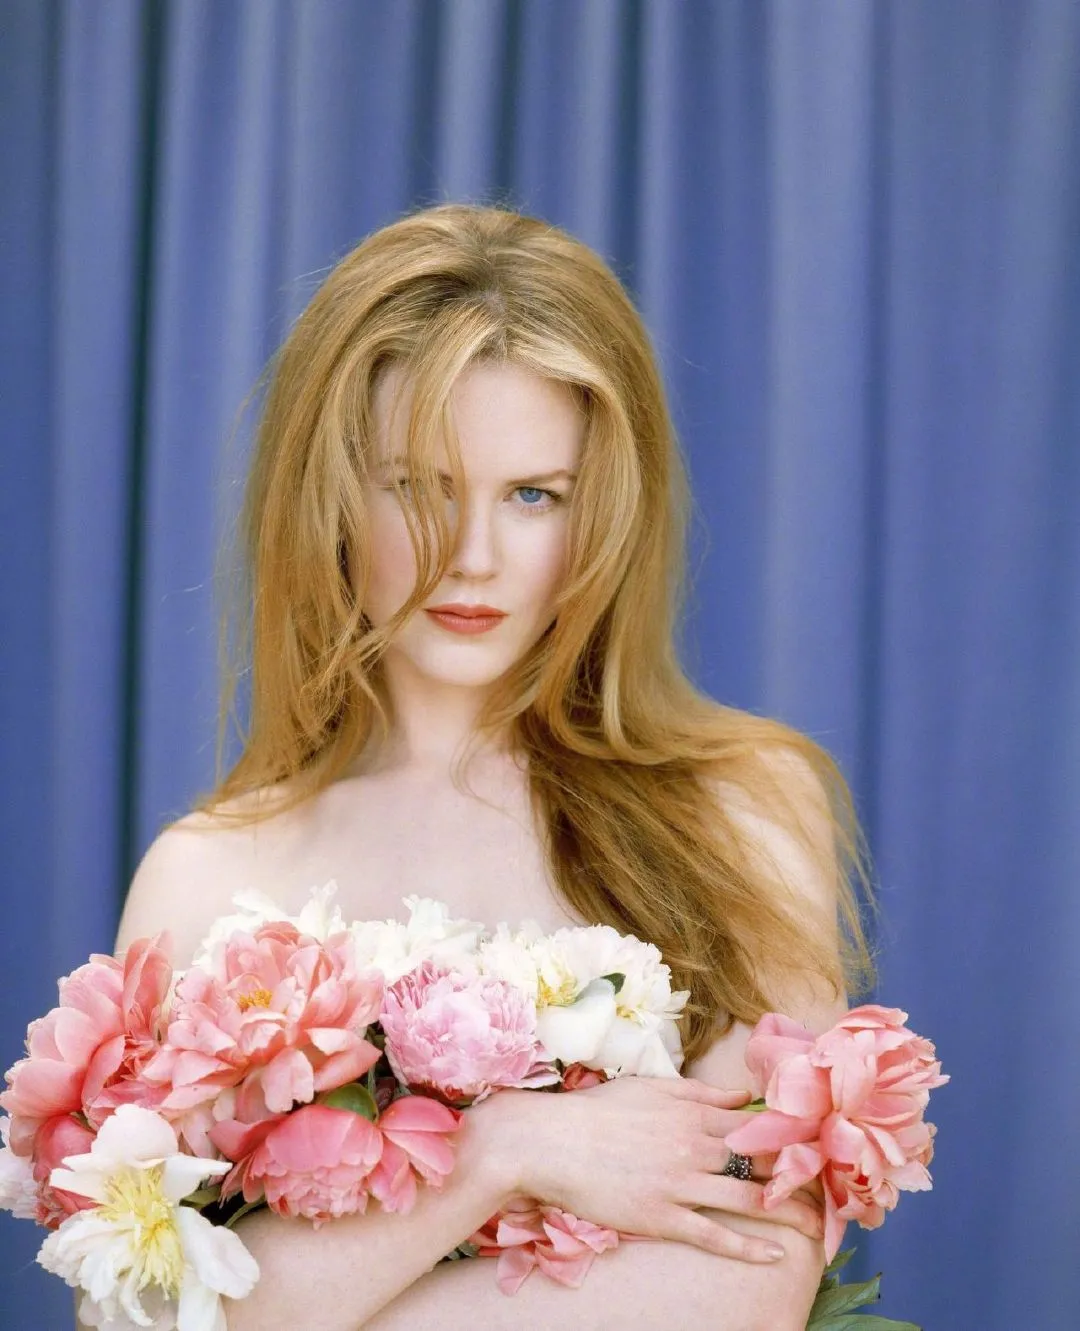 Nicole Kidman in 1996, 'Premiere' magazine photo | FMV6